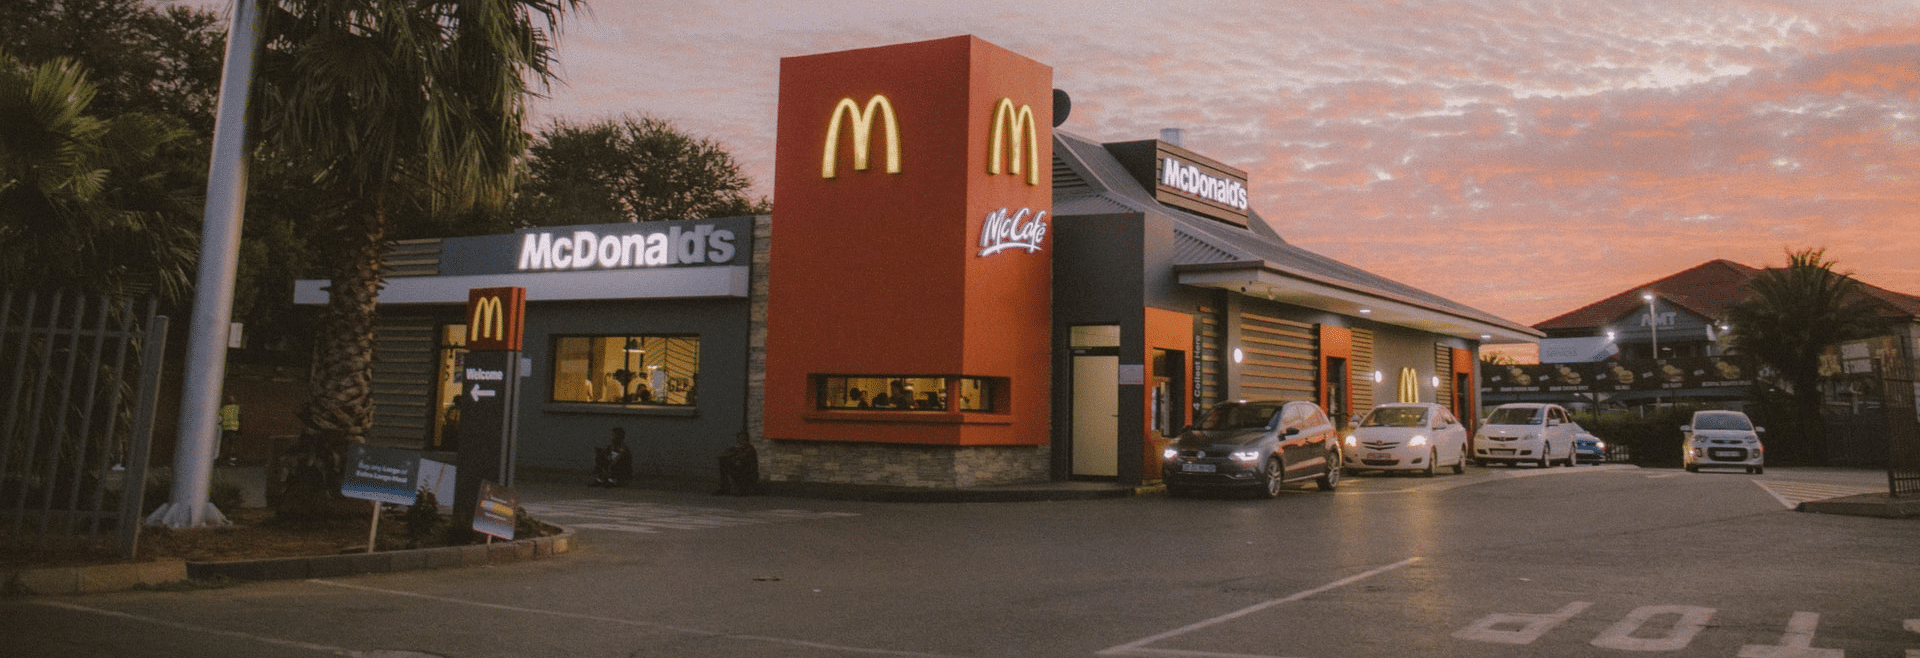 McDonald's testing its MyMcDonald's Rewards program in parts of the United States.